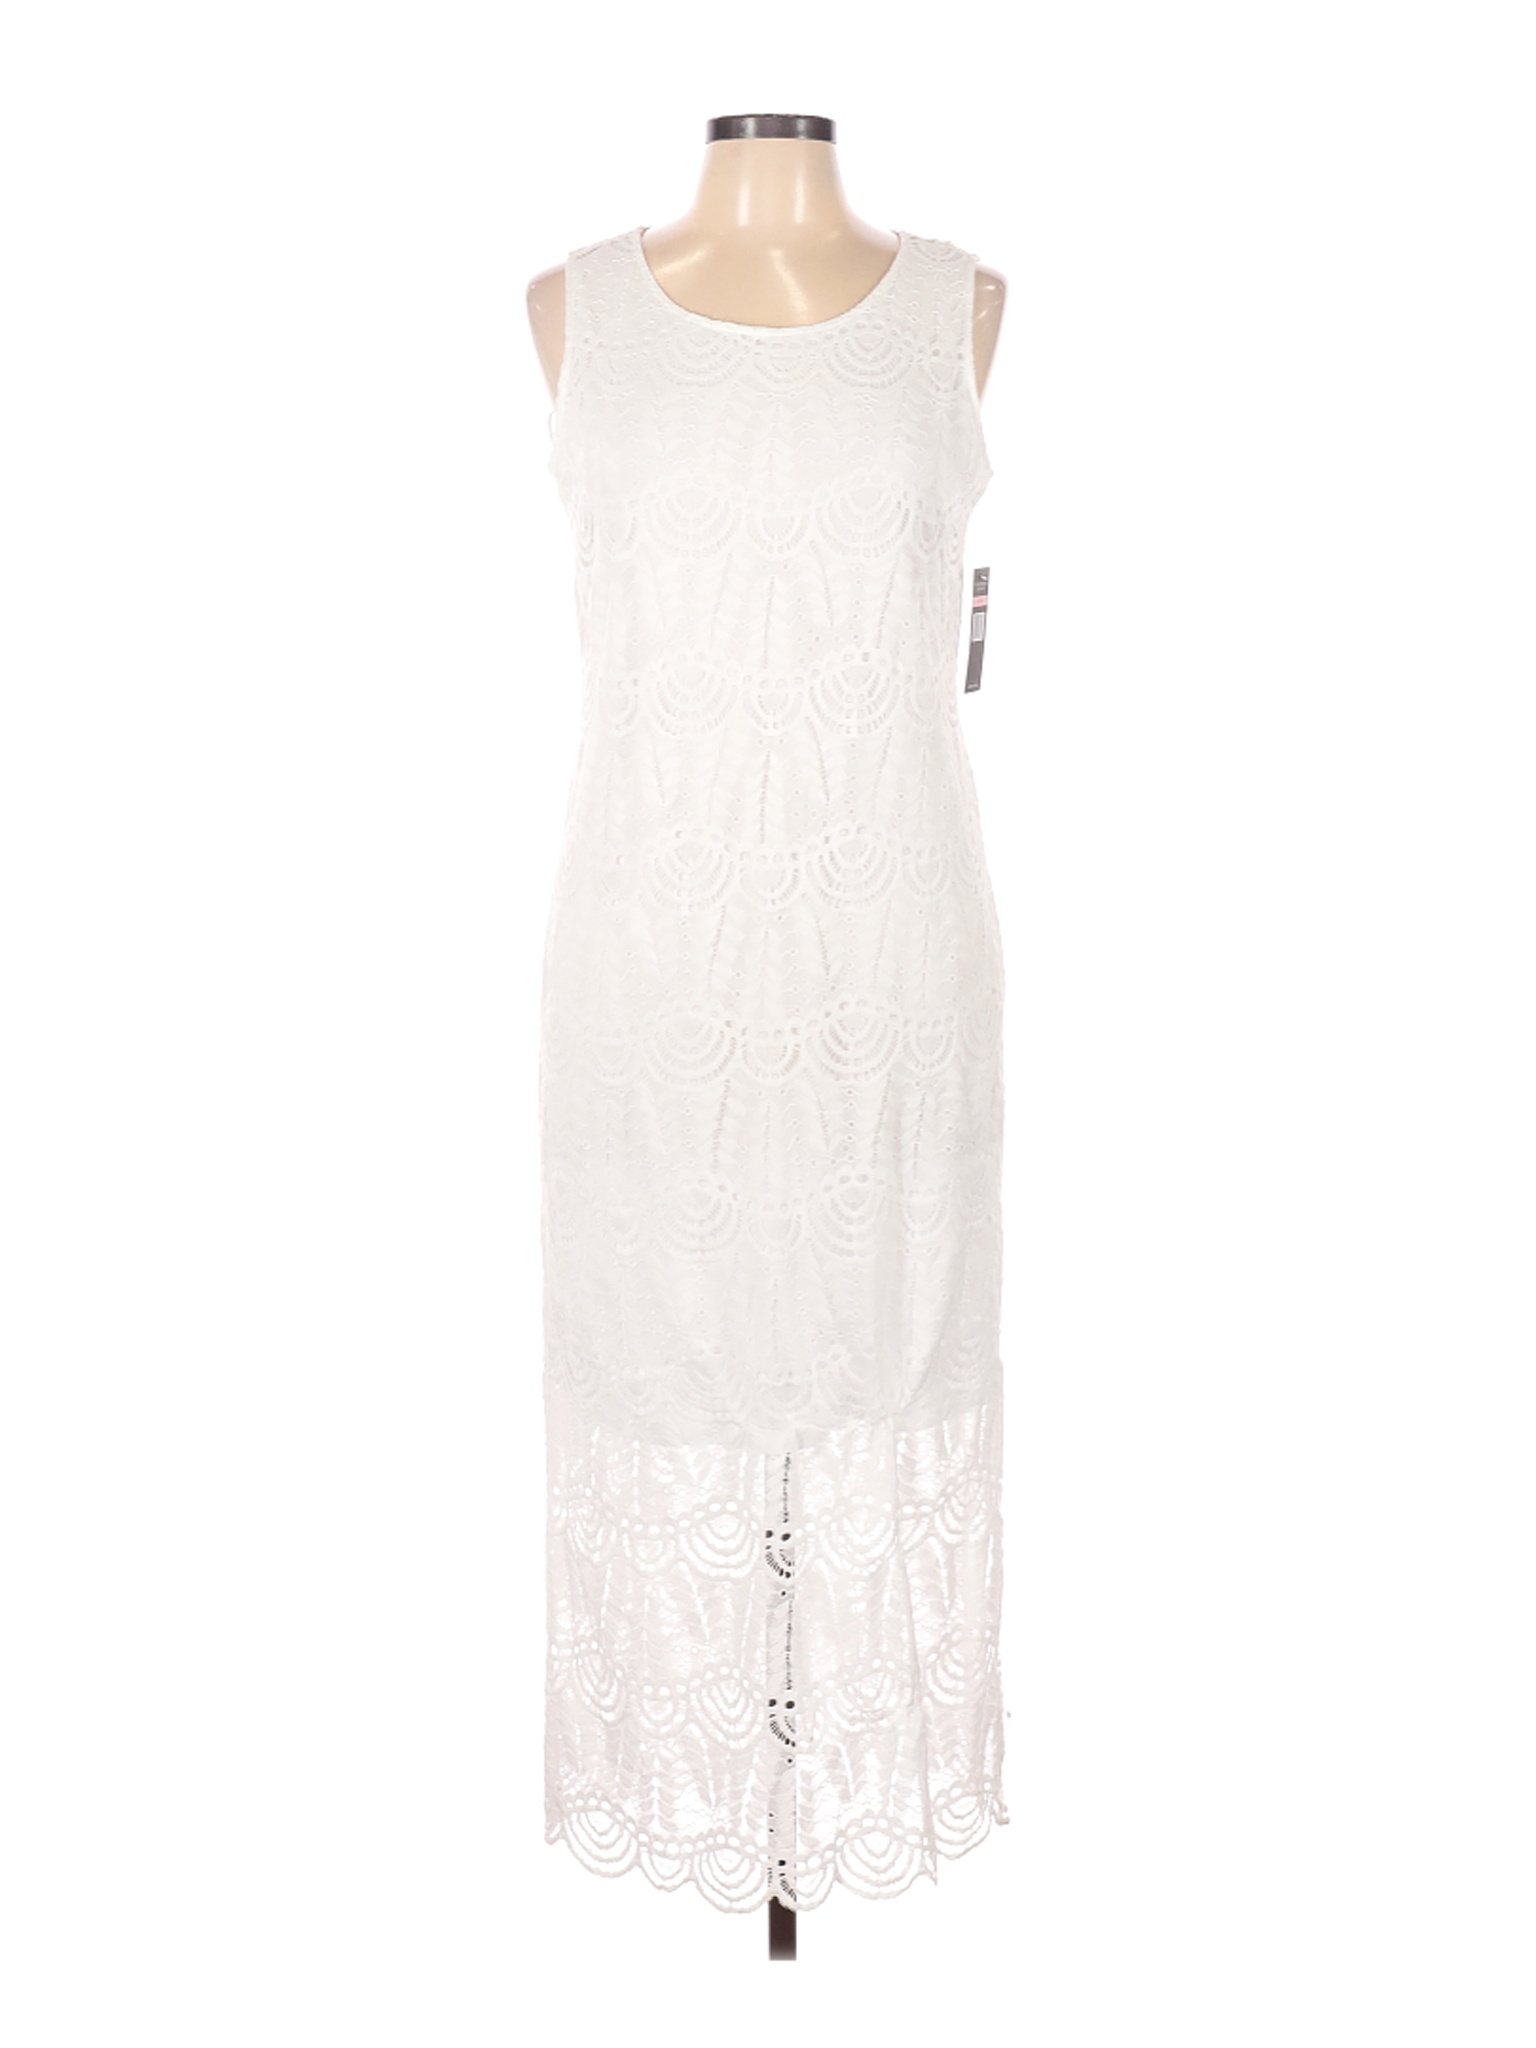 NWT Sharagano Women White Casual Dress 10 Petites | eBay